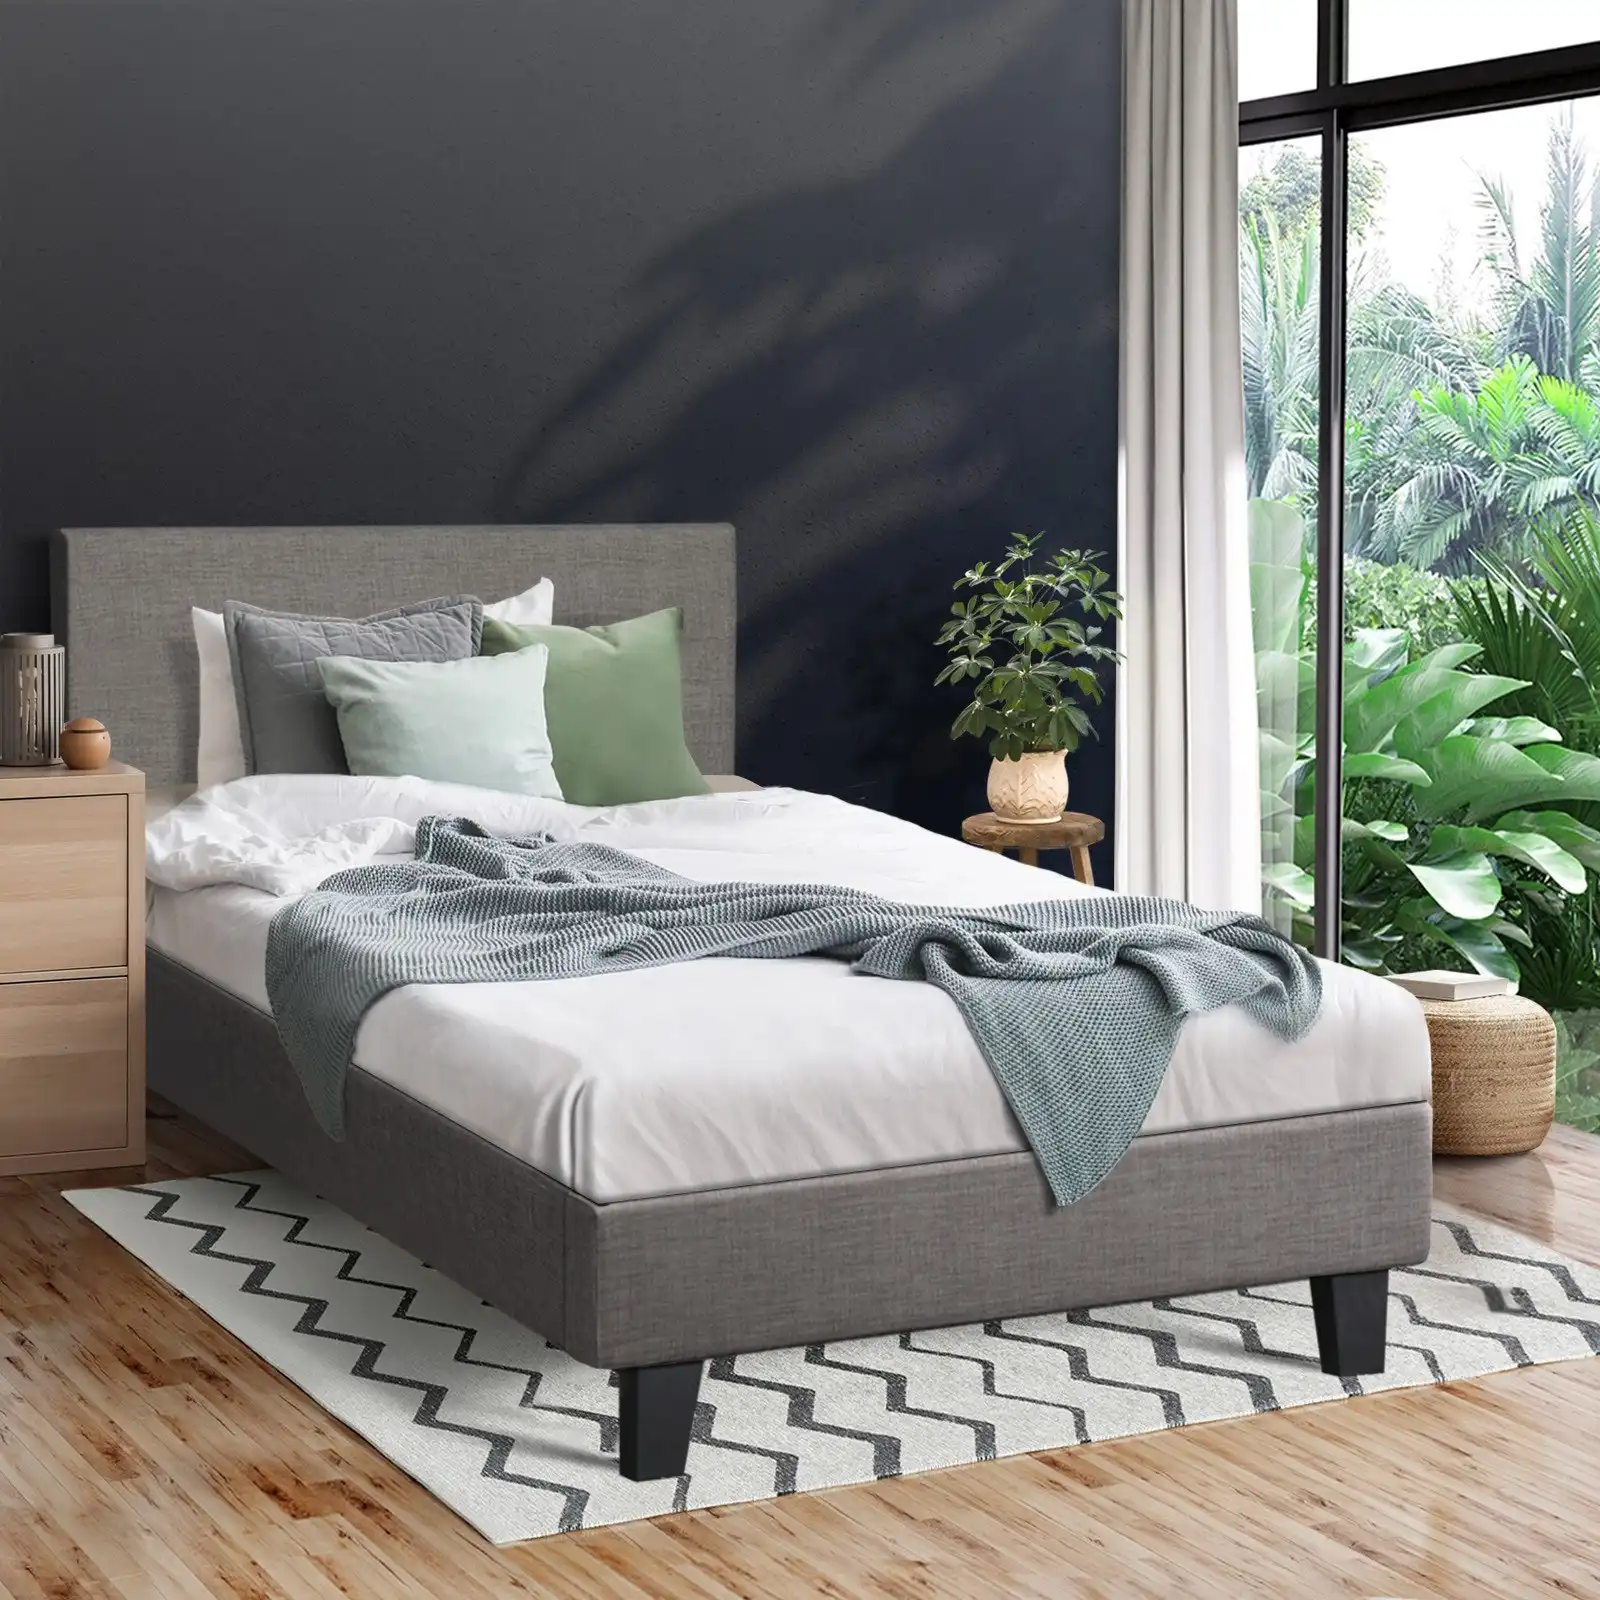 Oikiture Bed Frame Single Size Mattress Base Platform Wooden Slats Grey Fabric